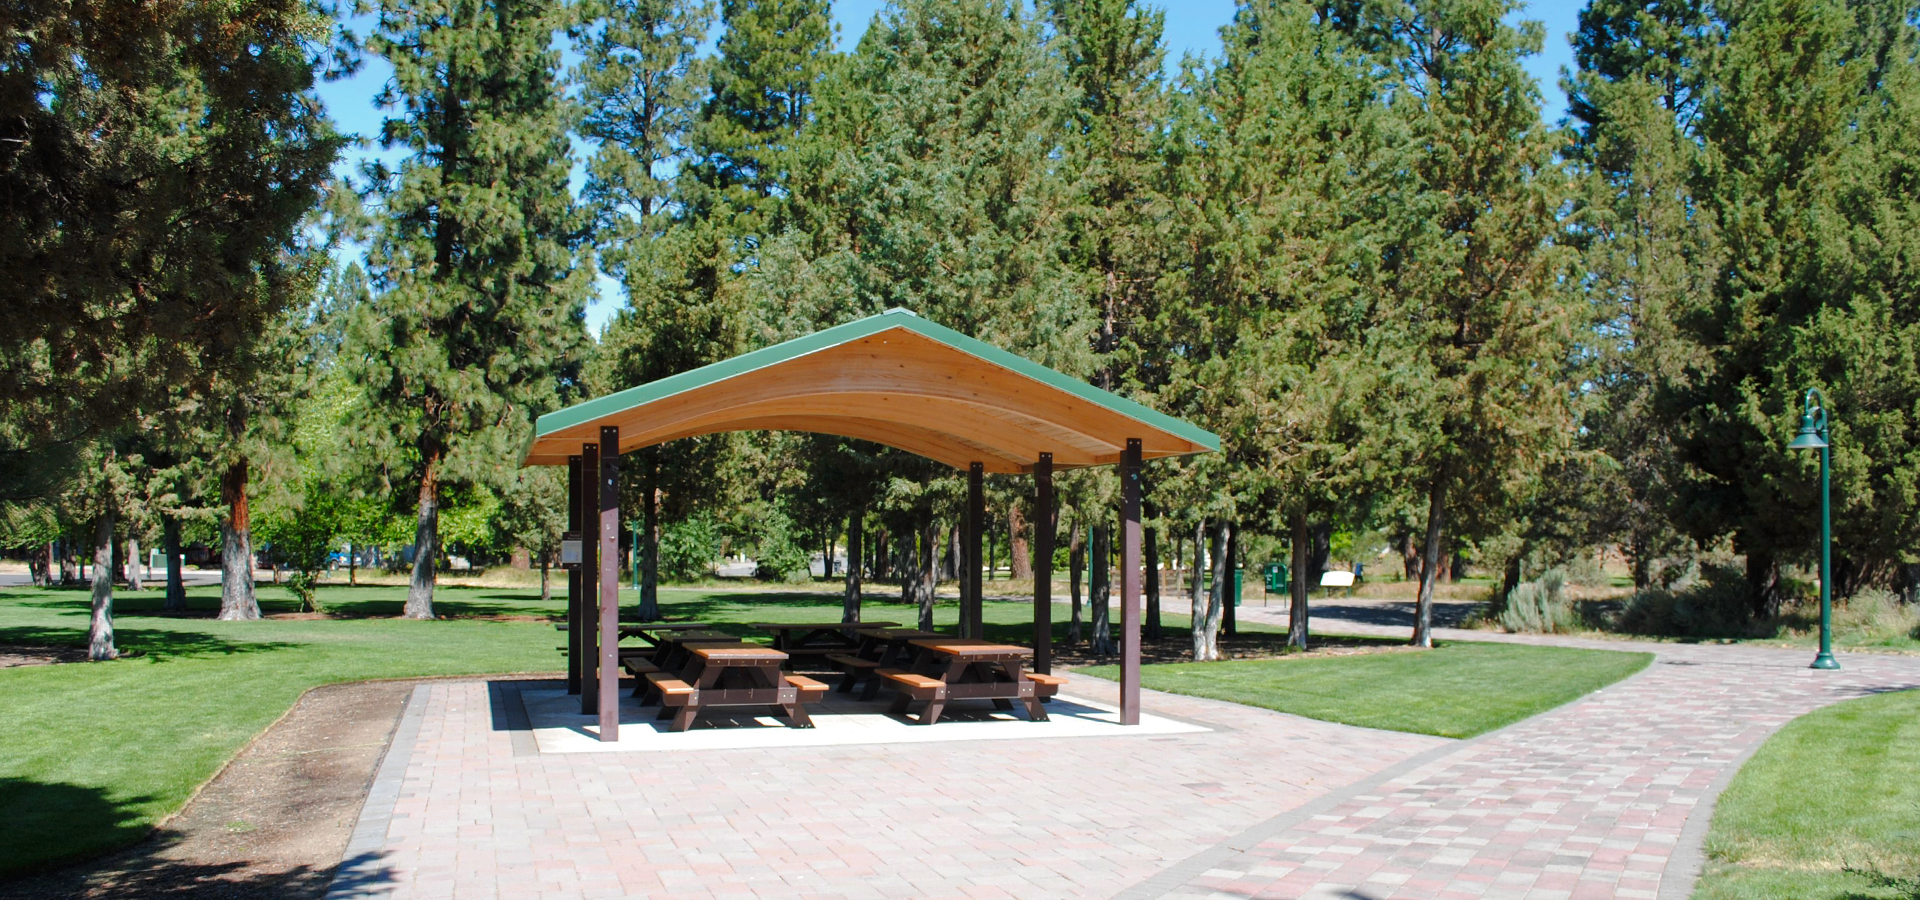 The picnic shelter at Larkspur Park.